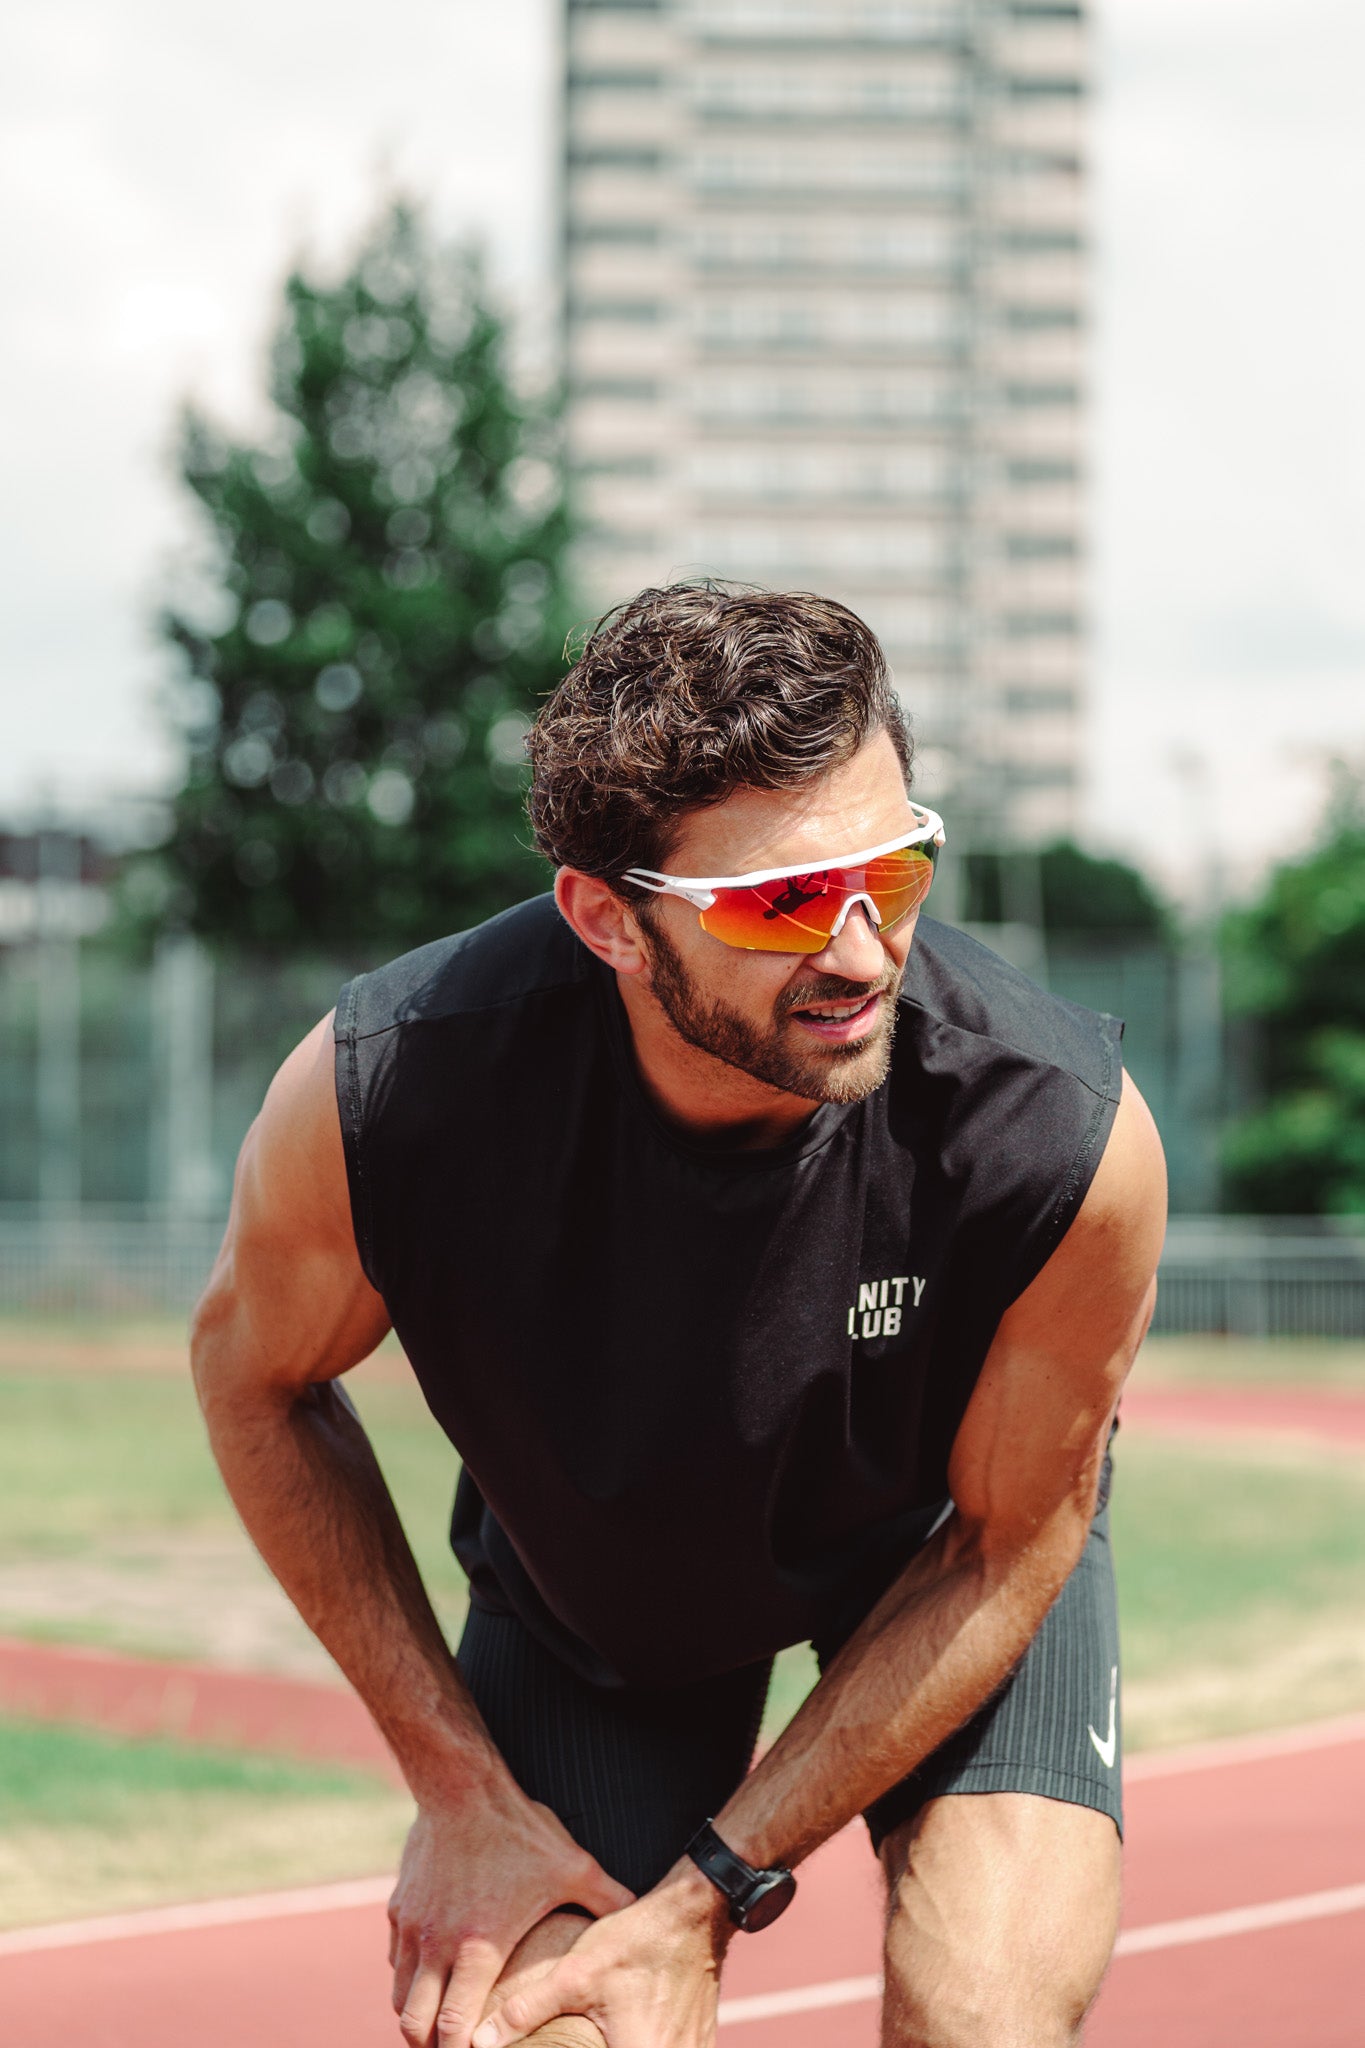 Athletic Sport Sunglasses for Running & More | Knockaround